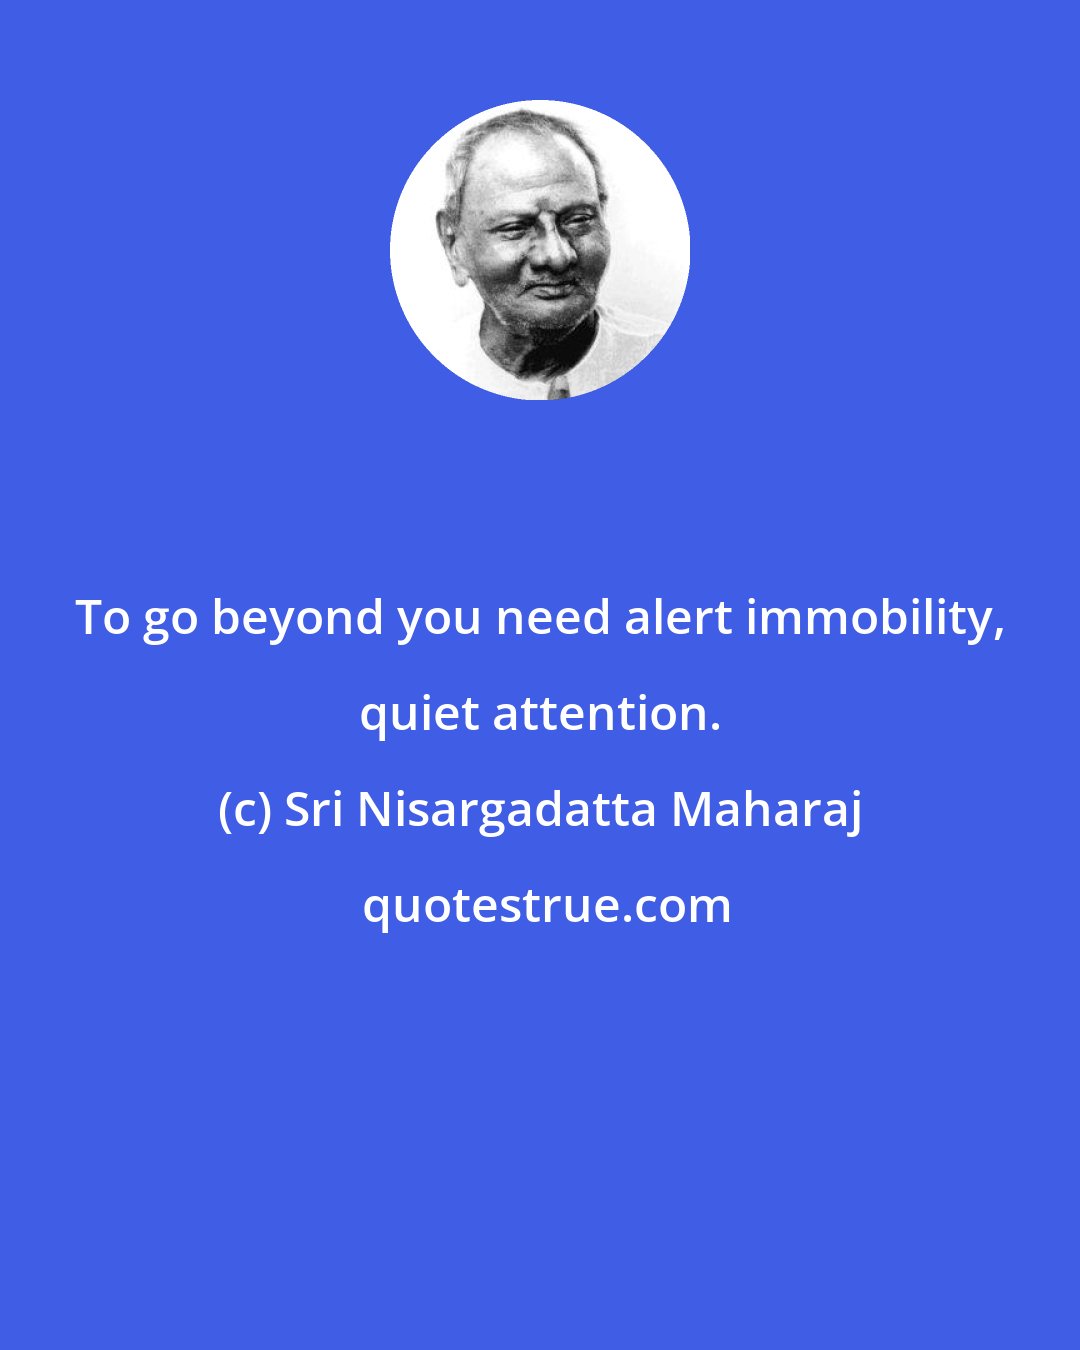 Sri Nisargadatta Maharaj: To go beyond you need alert immobility, quiet attention.